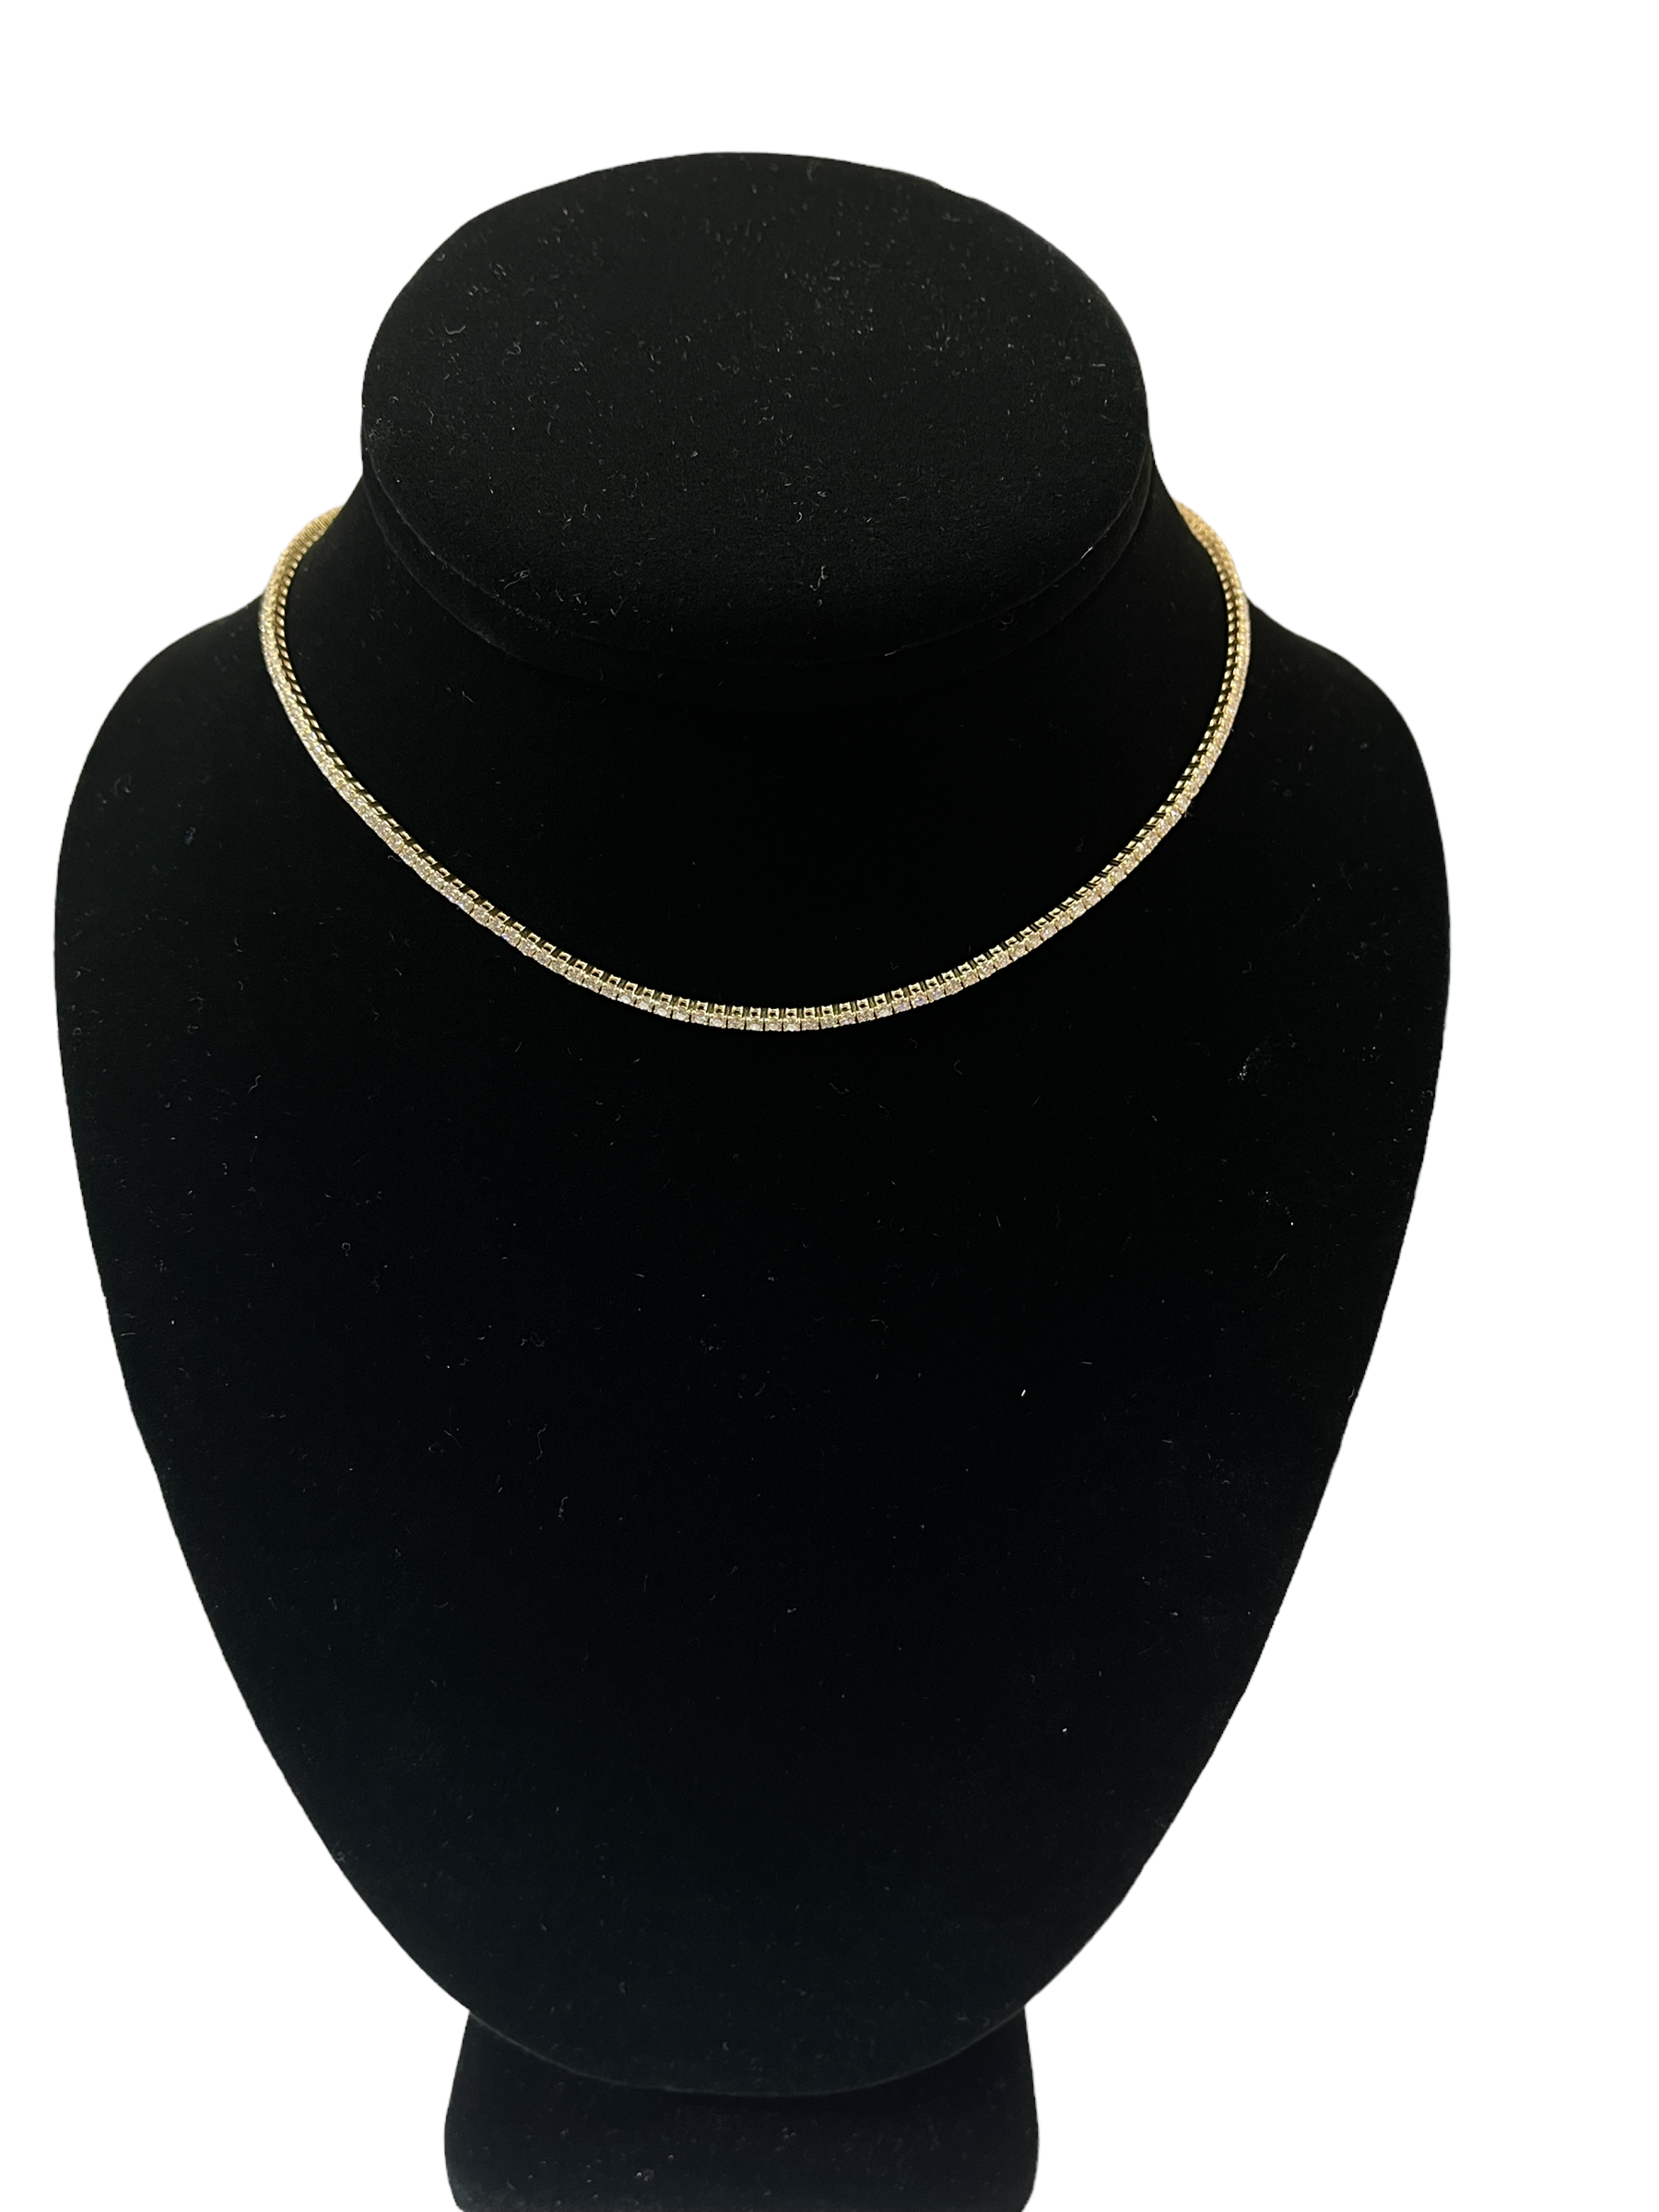 Round Brilliants Diamond Adjustable Choker Necklace 14kt White Gold